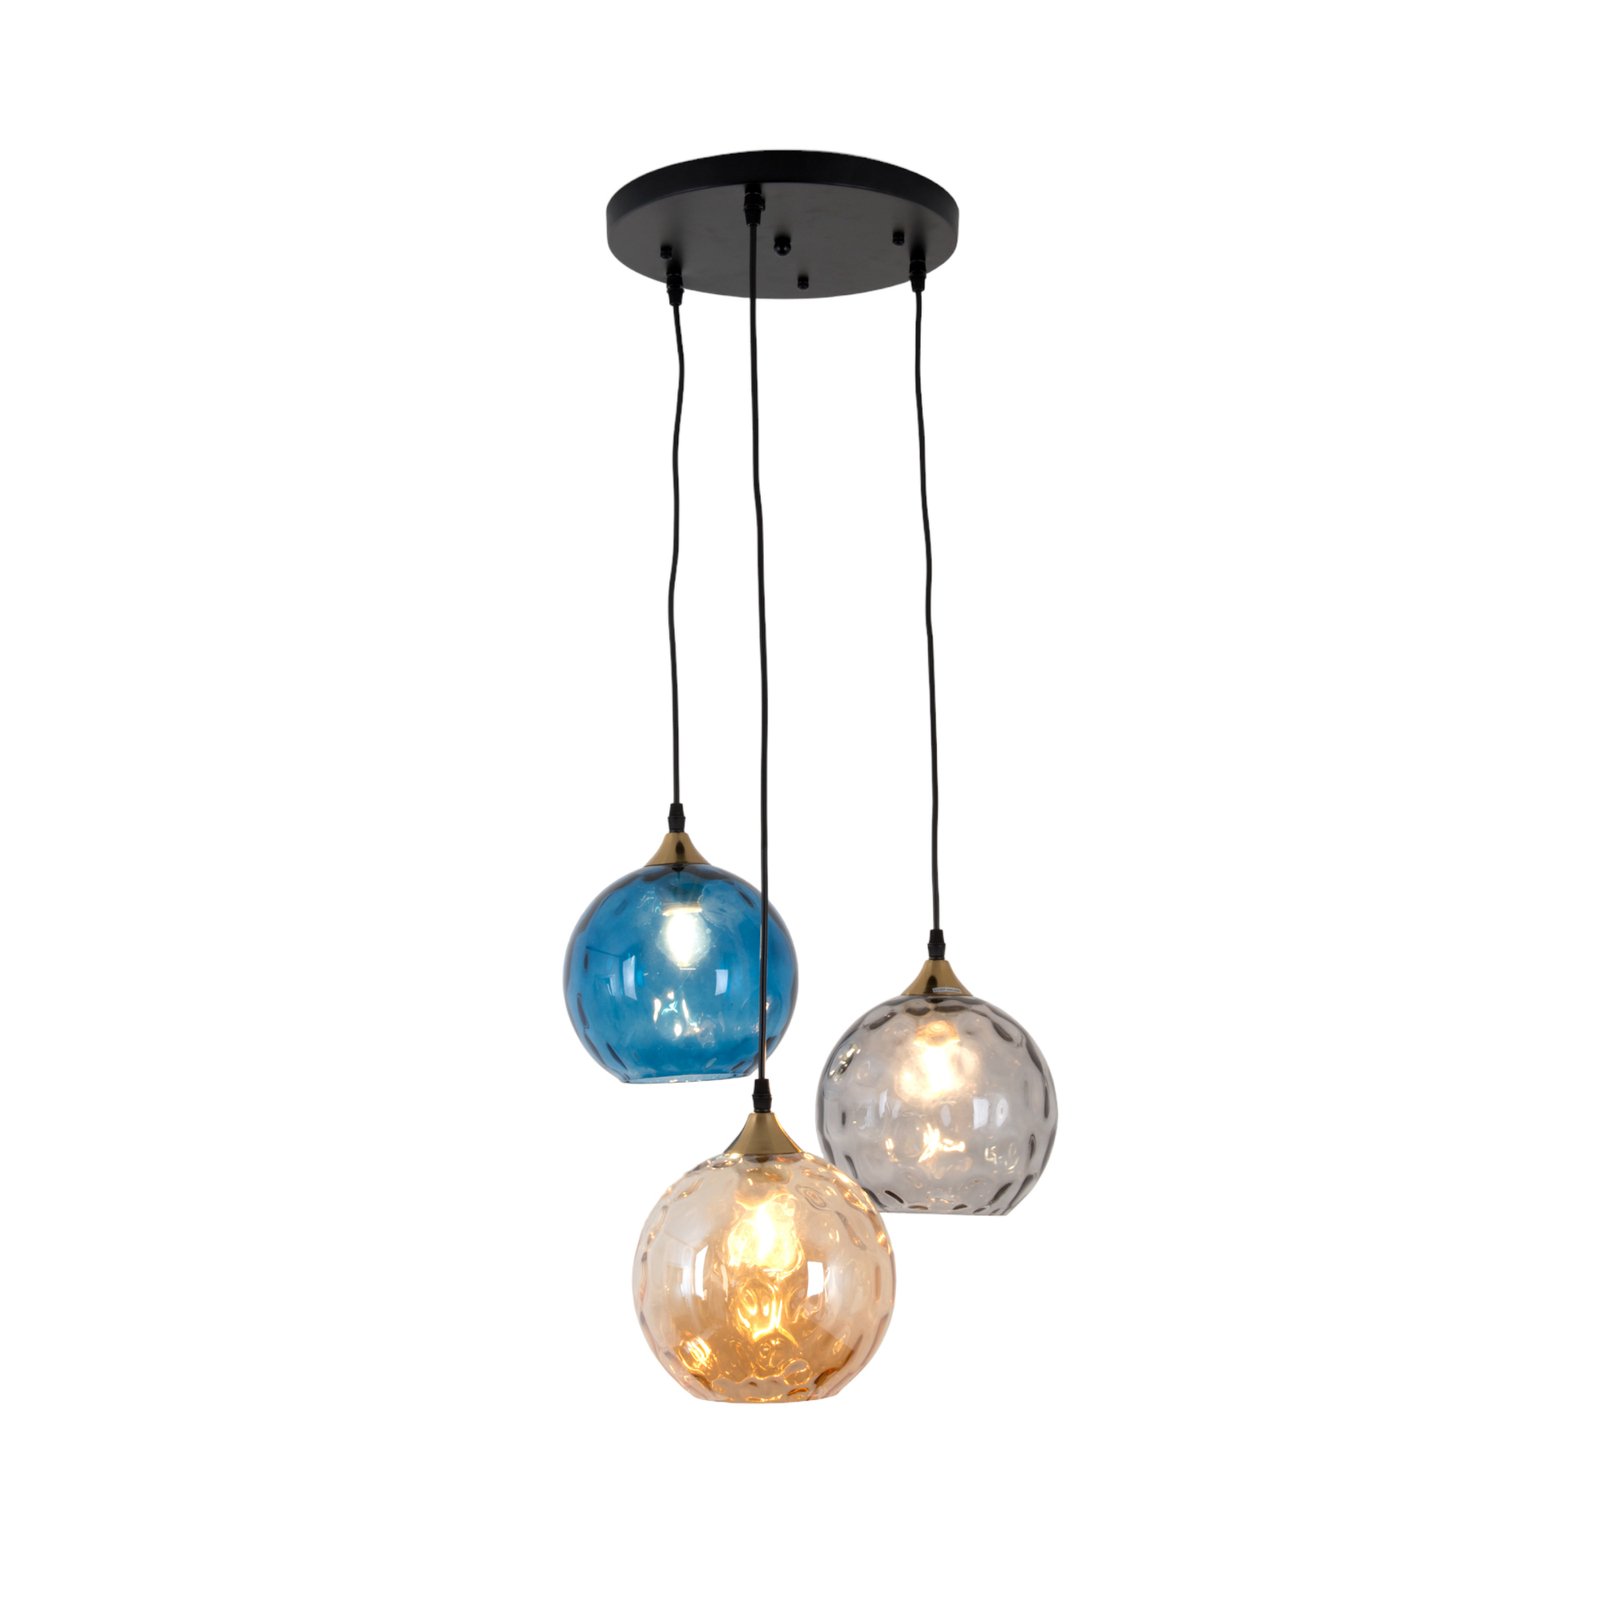 Hanglamp La Spezia 3-lamps glas amber/blauw/rook